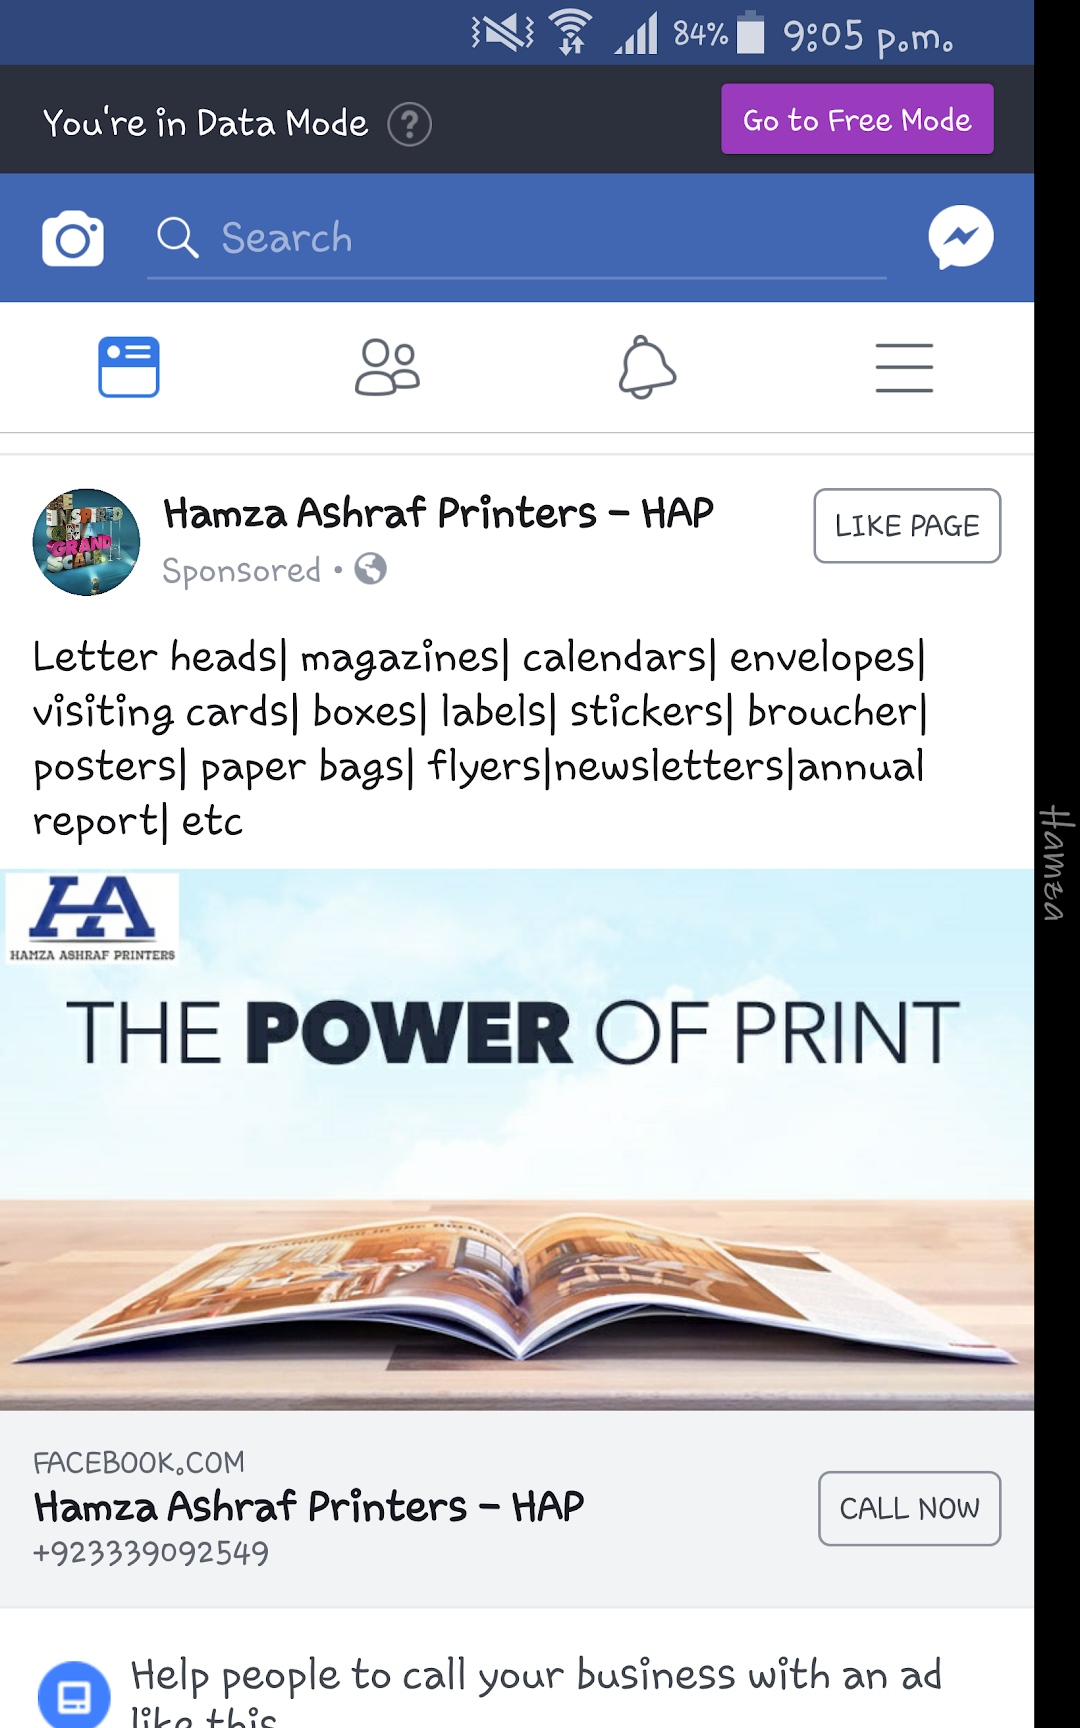 Hamza Ashraf Printers - HAP